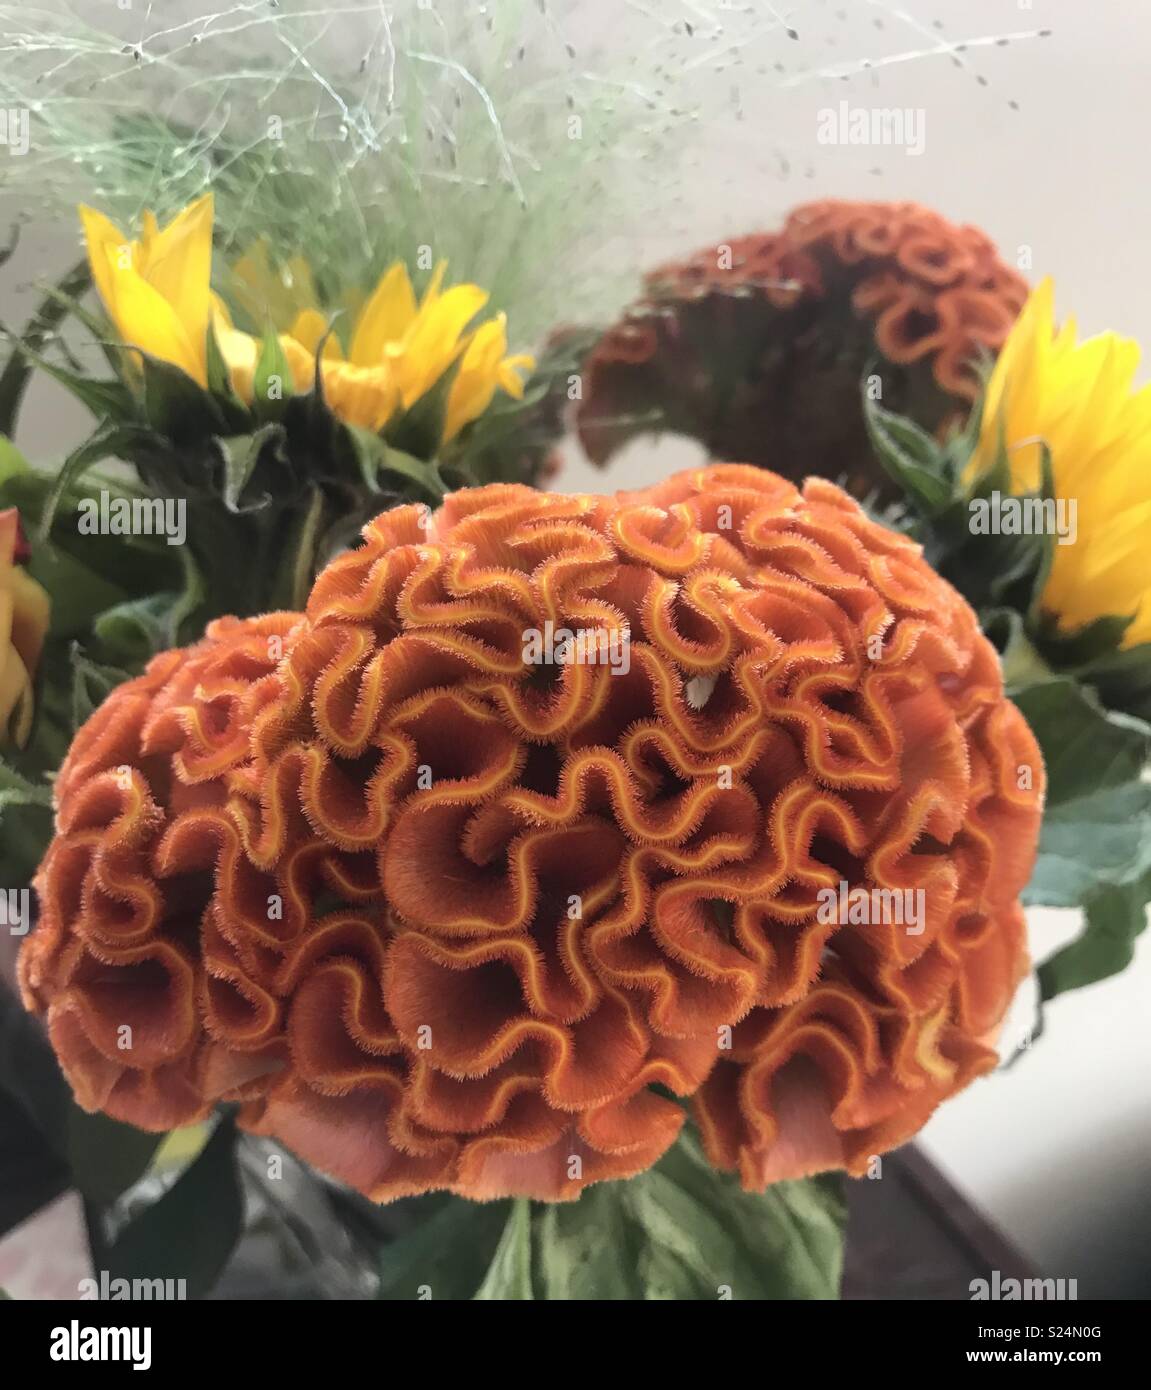 Brain-like flower. Stock Photo